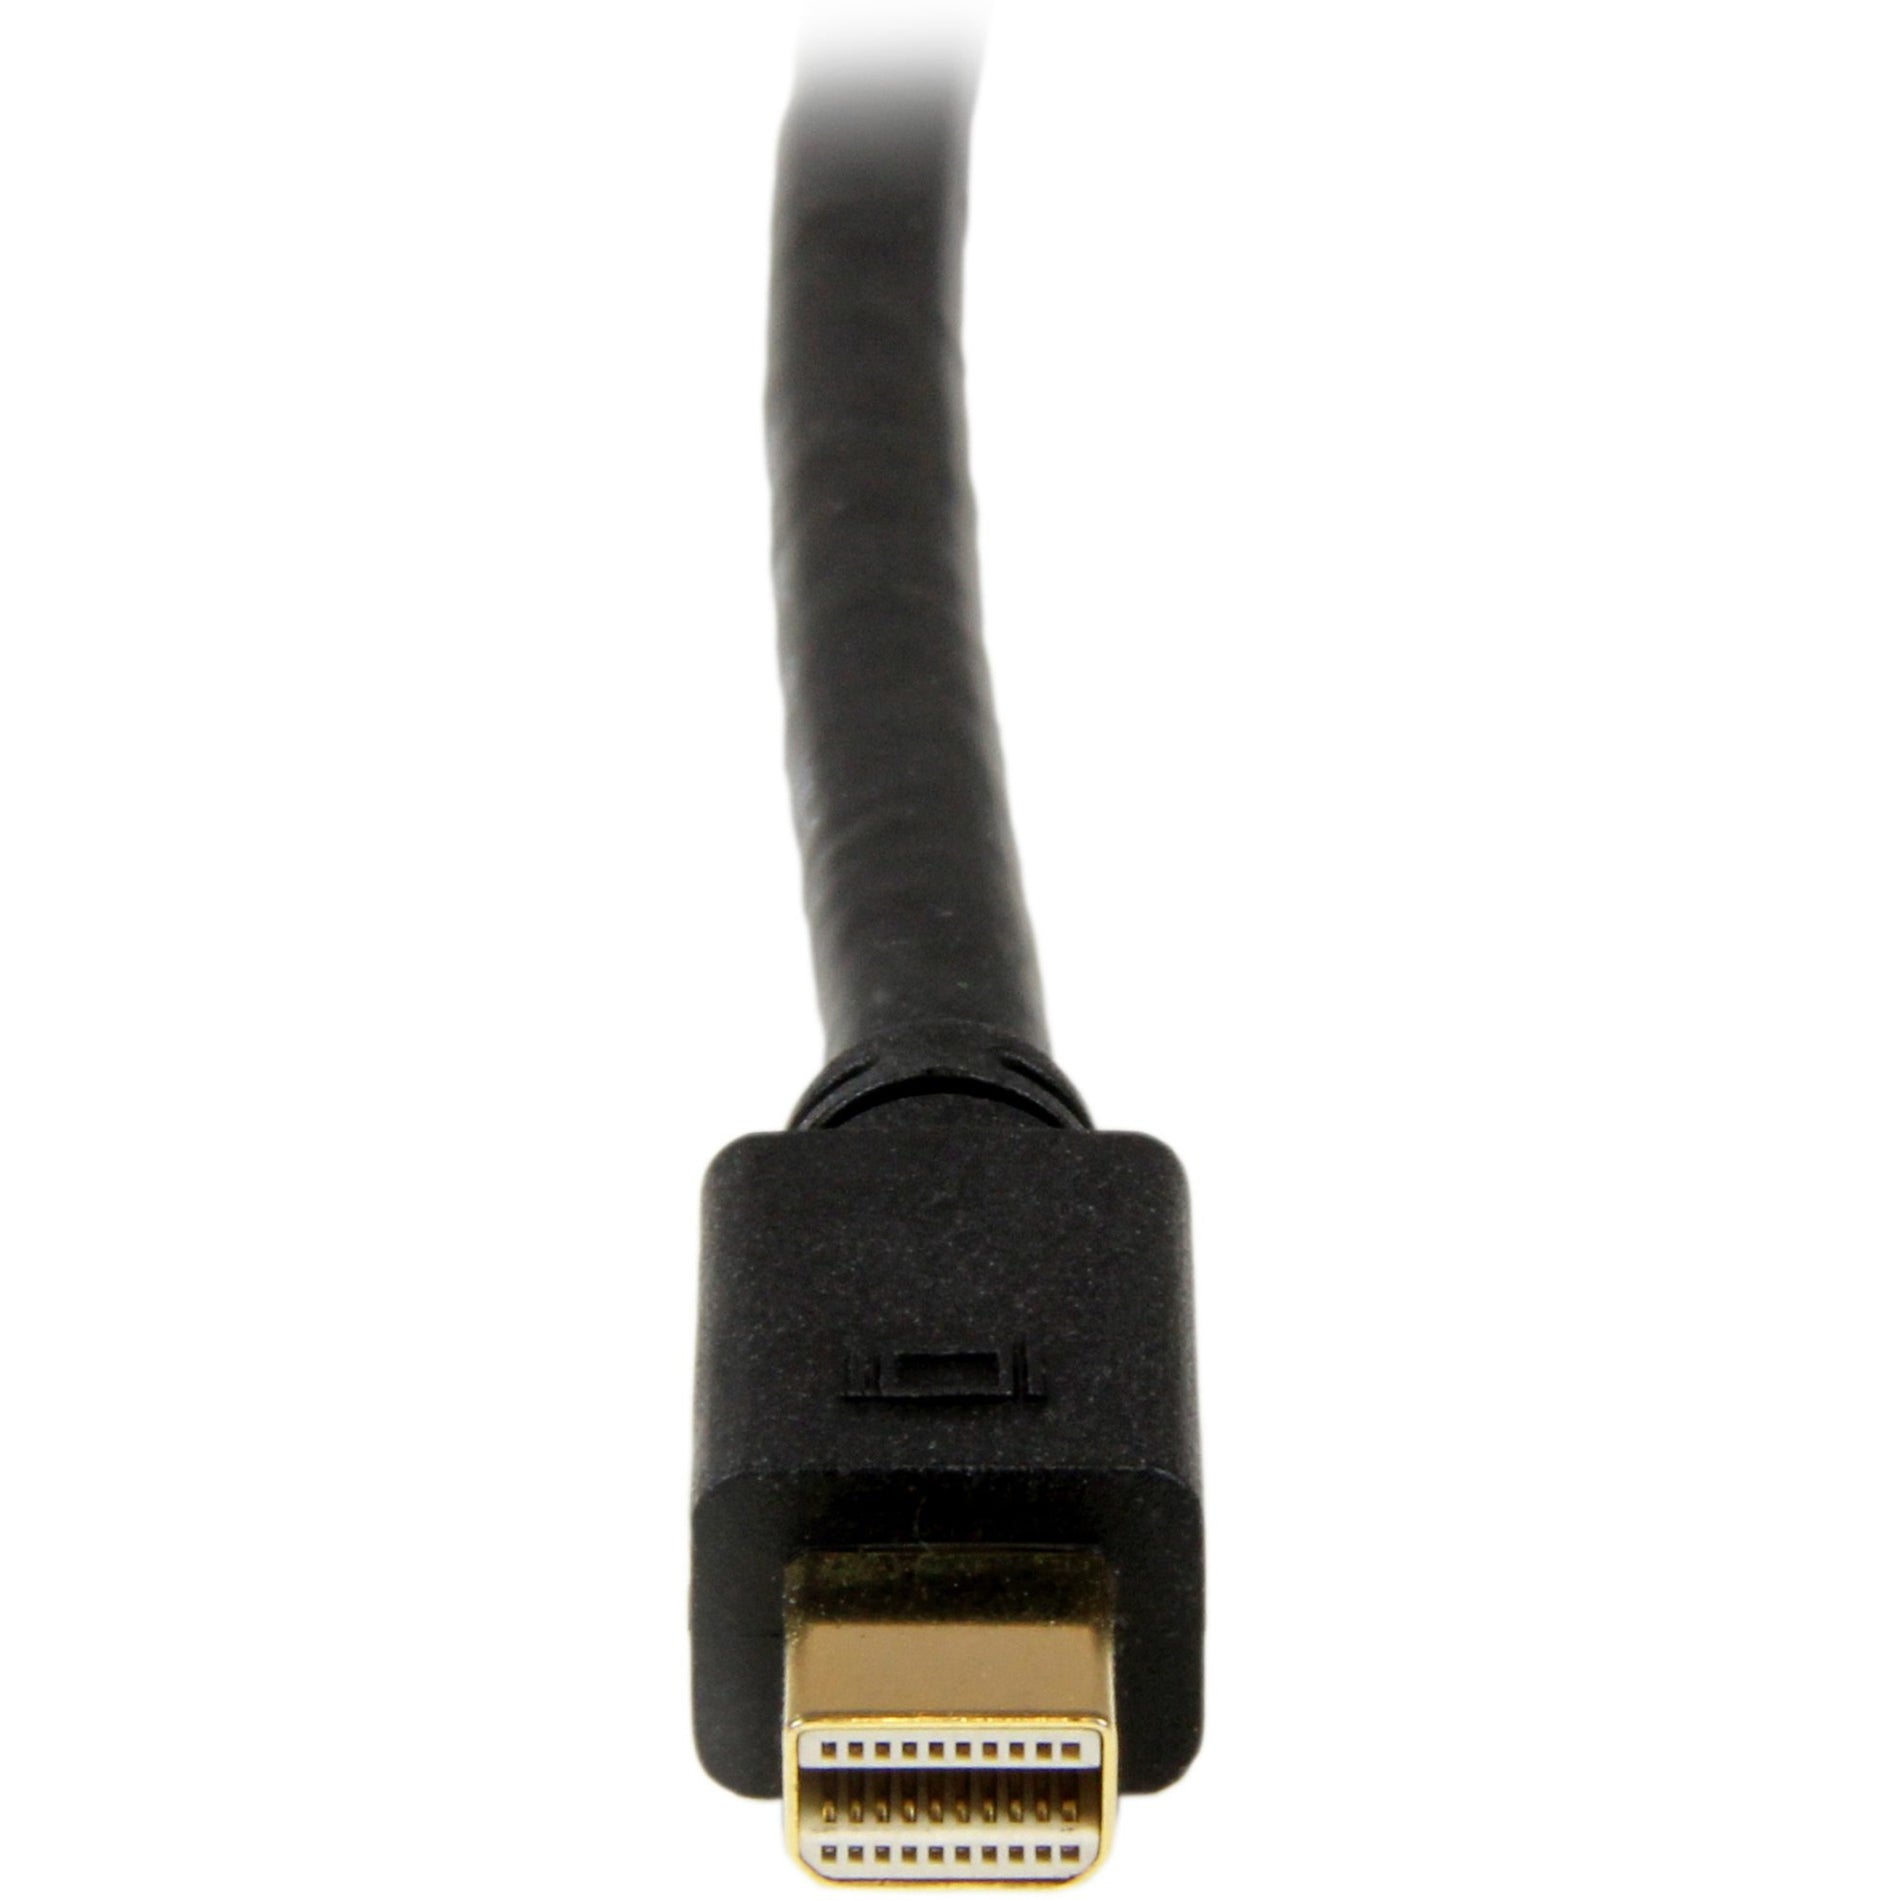 StarTech.com MDP2DVIMM10B Mini DisplayPort to DVI Adapter Converter Cable - Black, 10 ft, 1920x1200